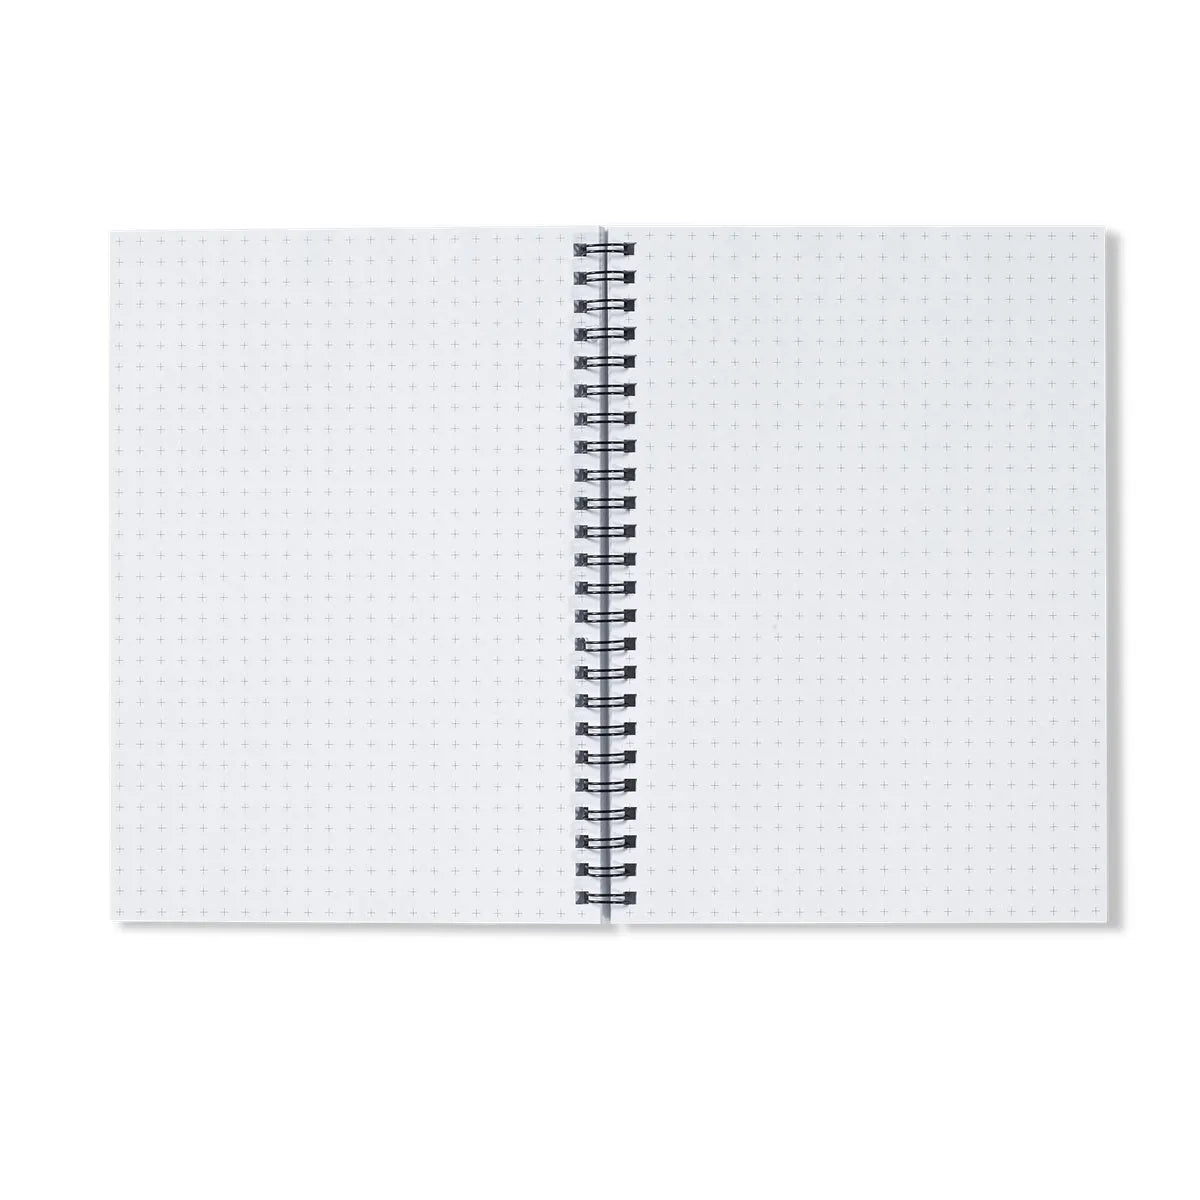 Snow By Kamisaka Sekka Notebook - Notebooks & Notepads - Aesthetic Art